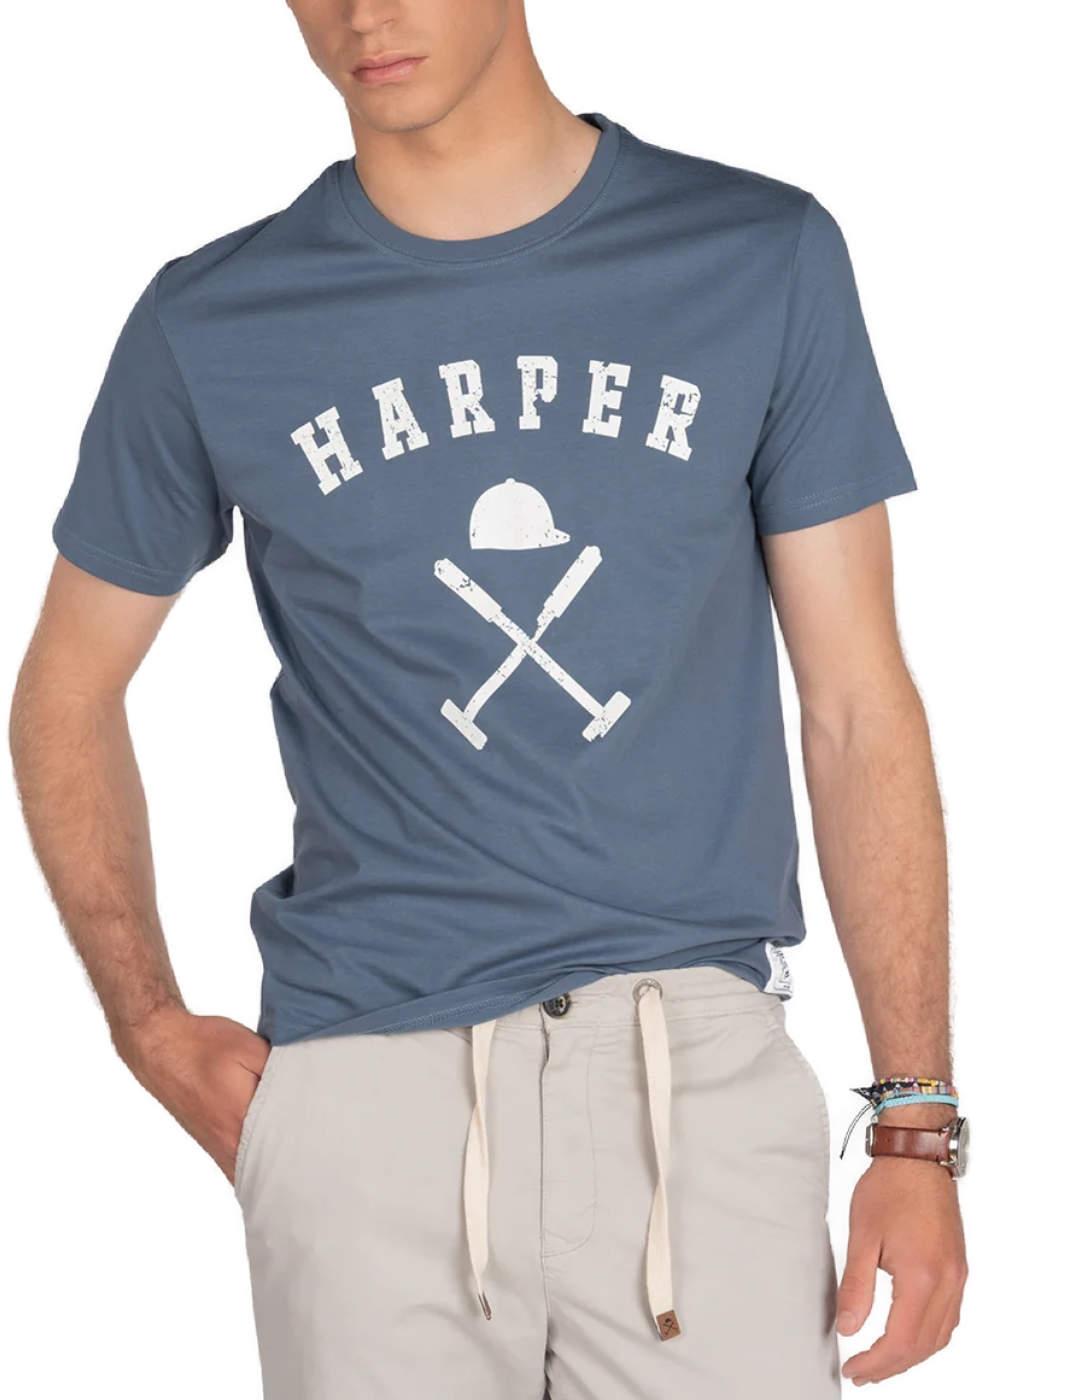 Camiseta Harper&Neyer new england azul manga corta de hombre